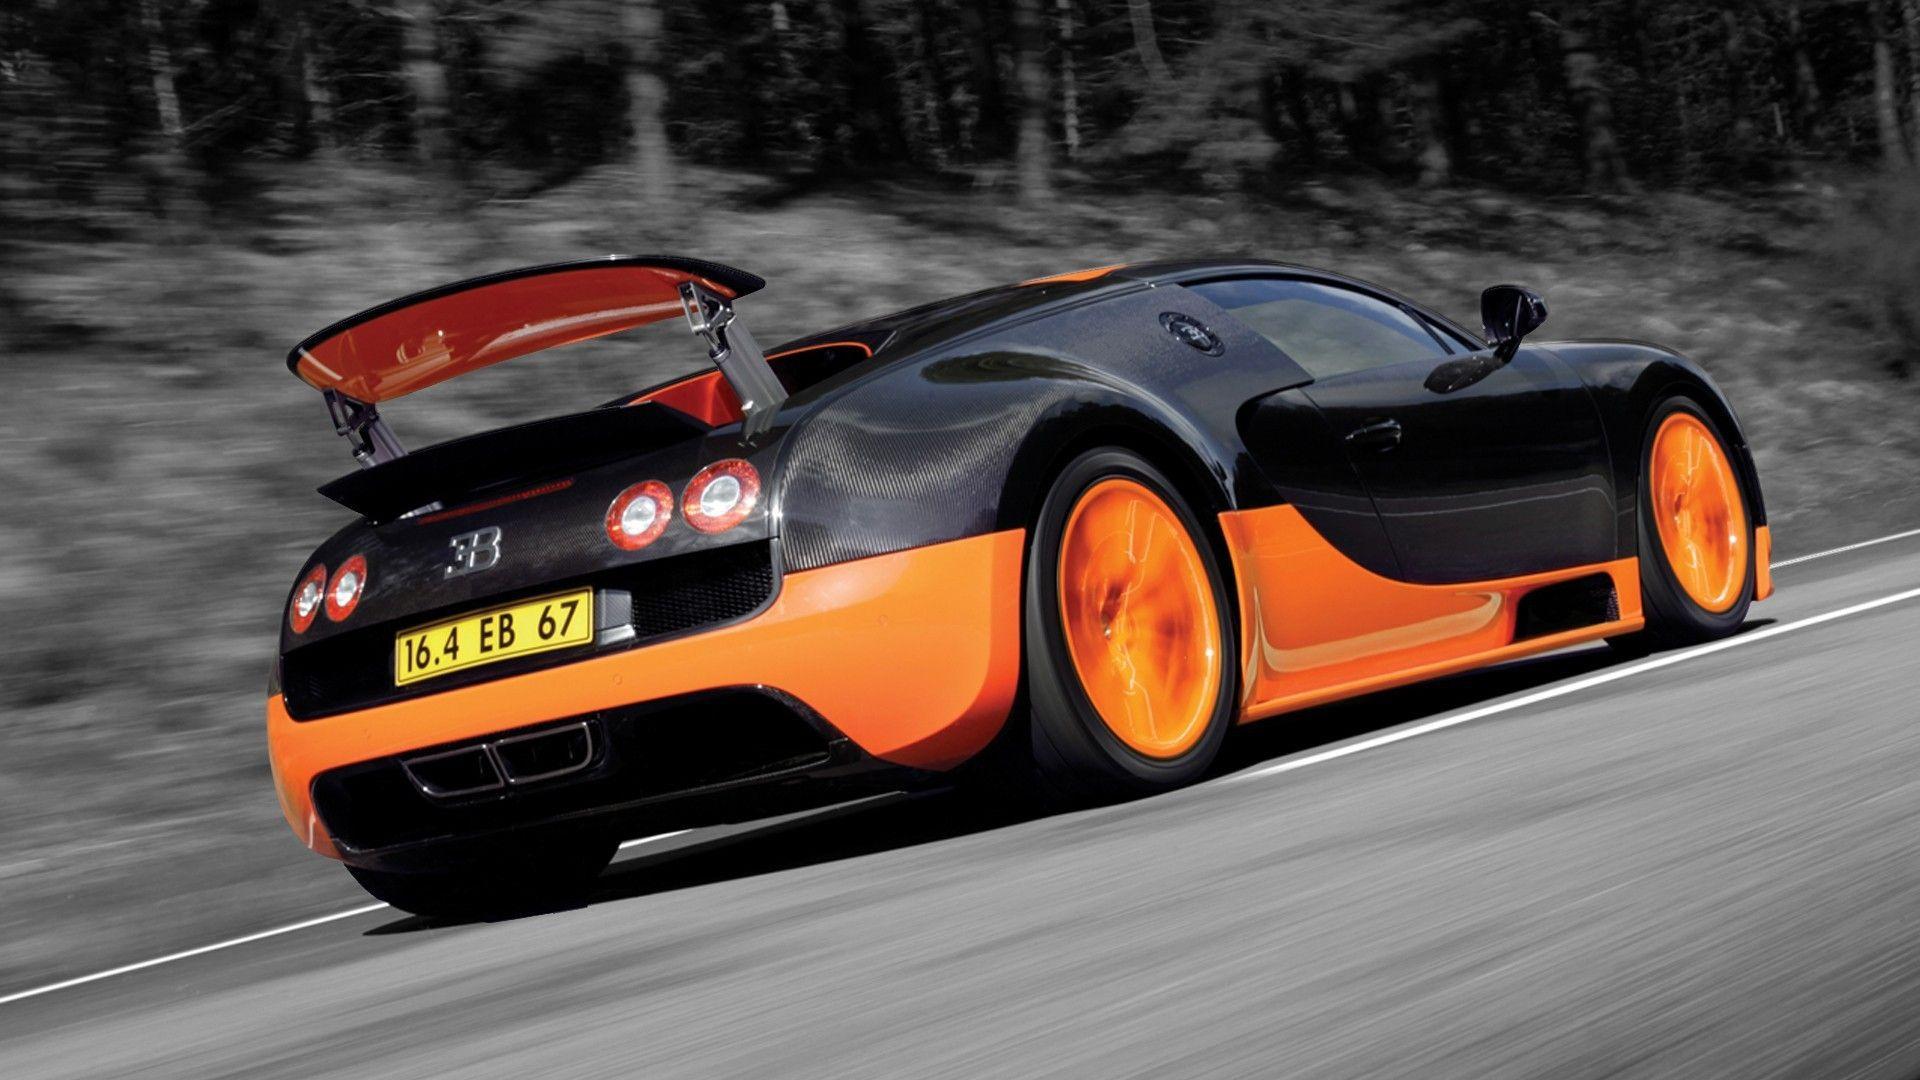 Nothing found for Bugatti Veyron Super Sport Wallpaper Full HD